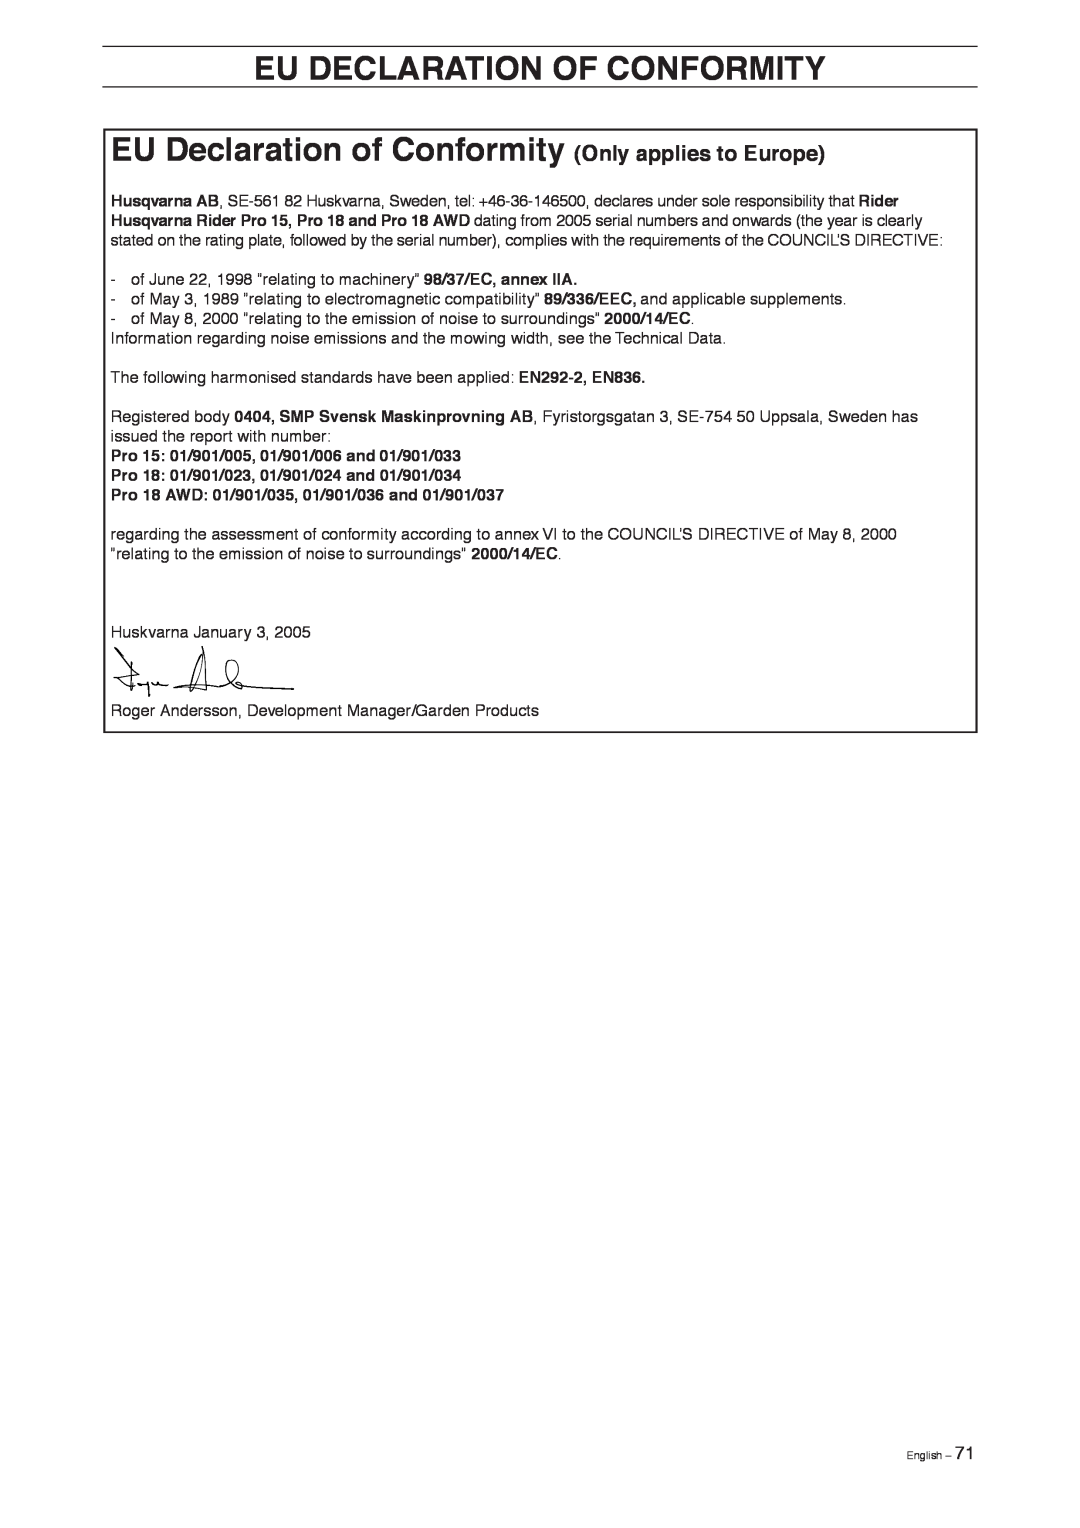 Husqvarna Pro 18 AWD manual Eu Declaration Of Conformity, Pro 15: 01/901/005, 01/901/006 and 01/901/033 